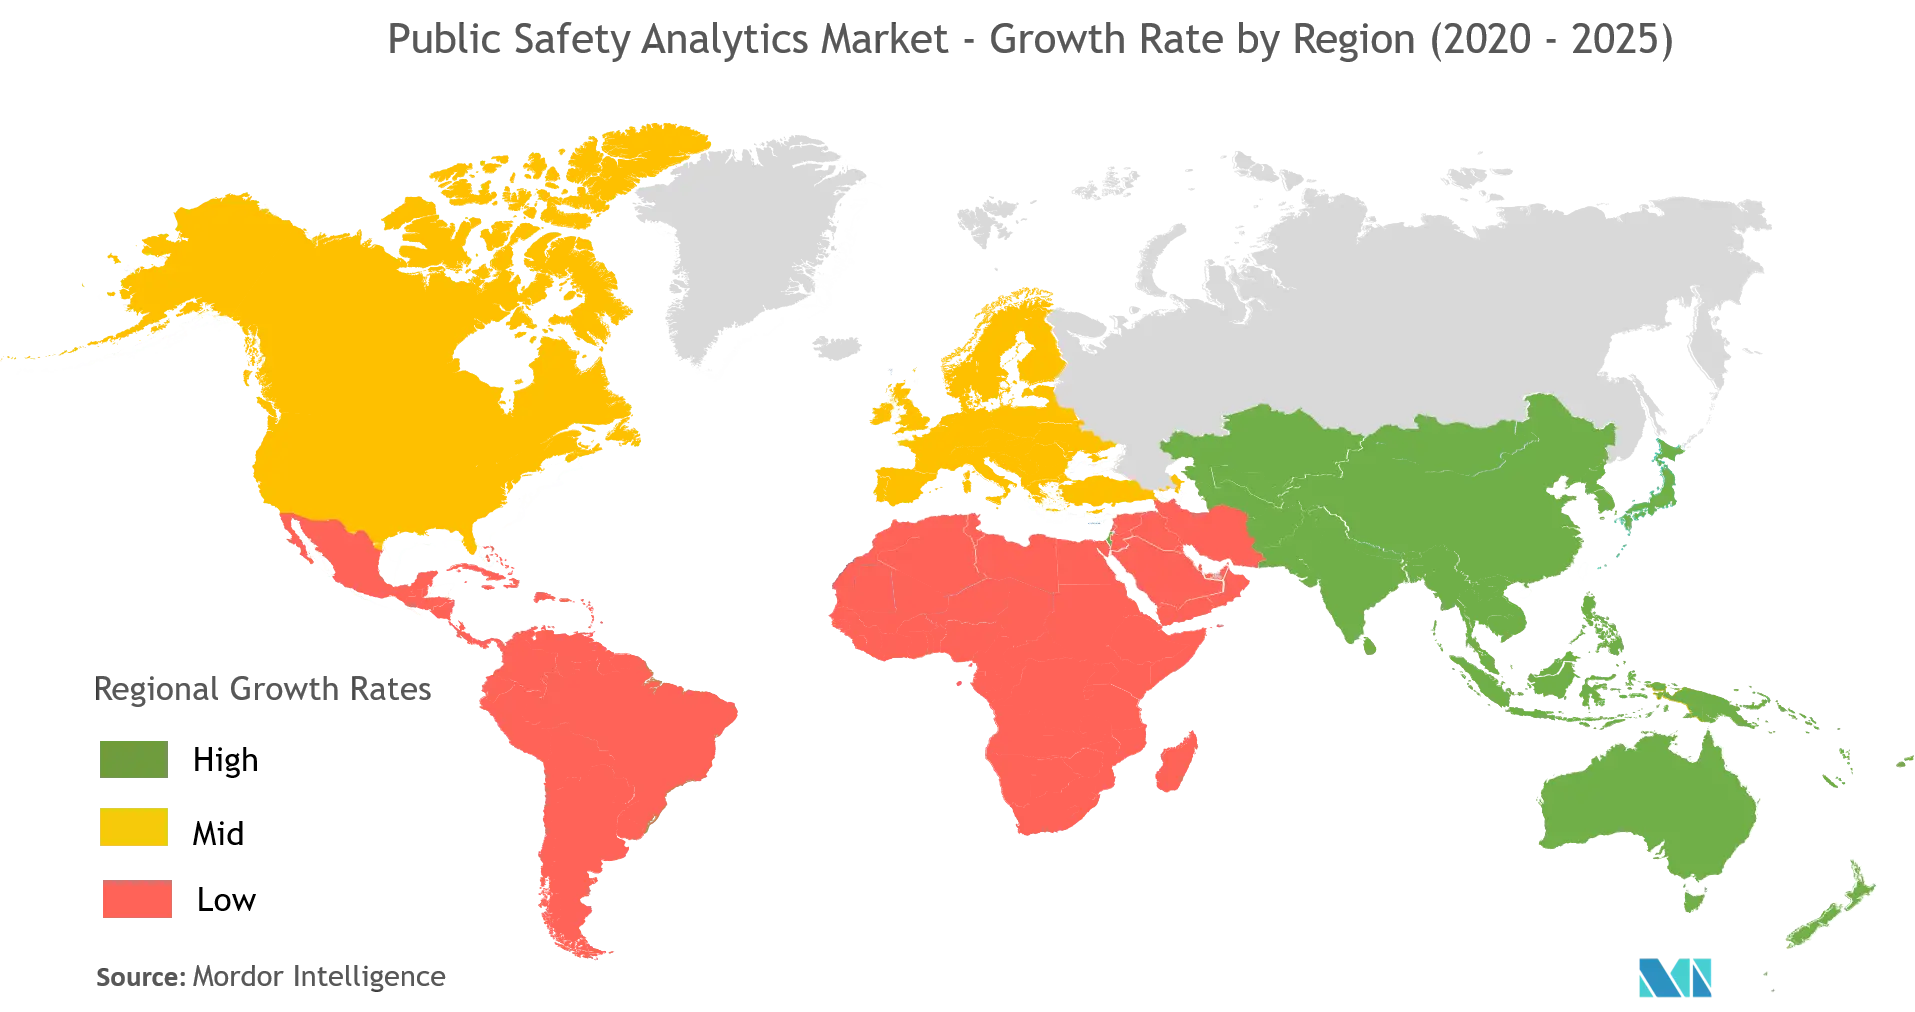 Public Safety Analytics Market Growth by Region